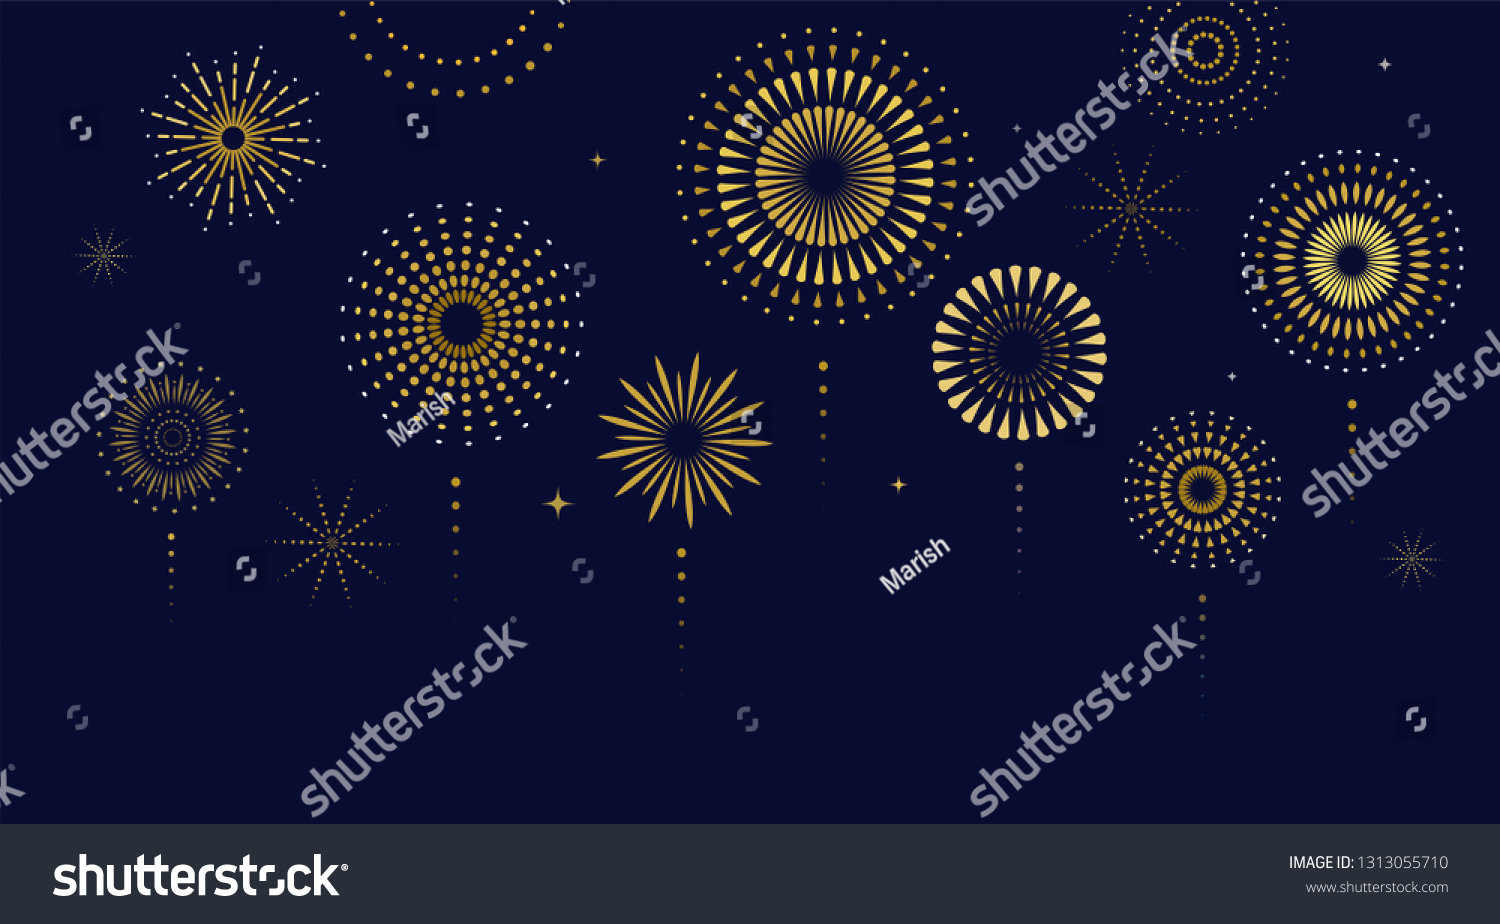 SVG of Fireworks, firecracker at night, celebration background, winner, victory poster, banner - vector illustration svg